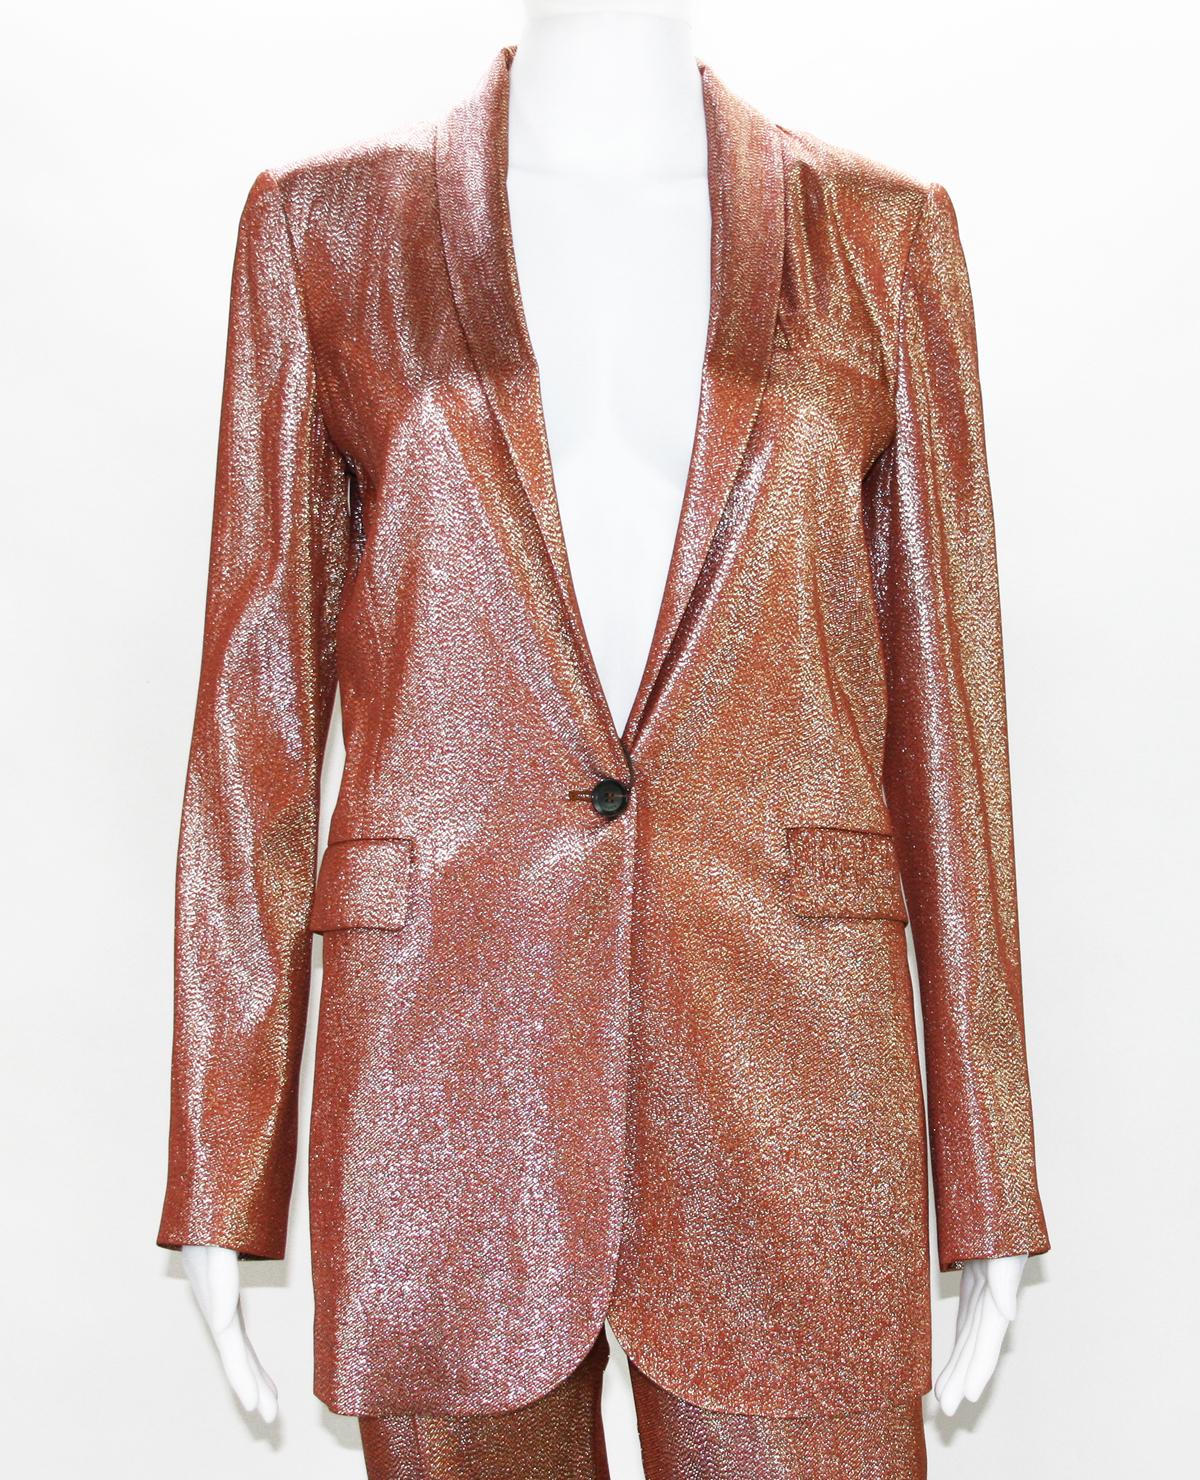 New $3950 Runway GUCCI Suit Iridescent Rust Liquid Lame Jacket & Pants size 40 2